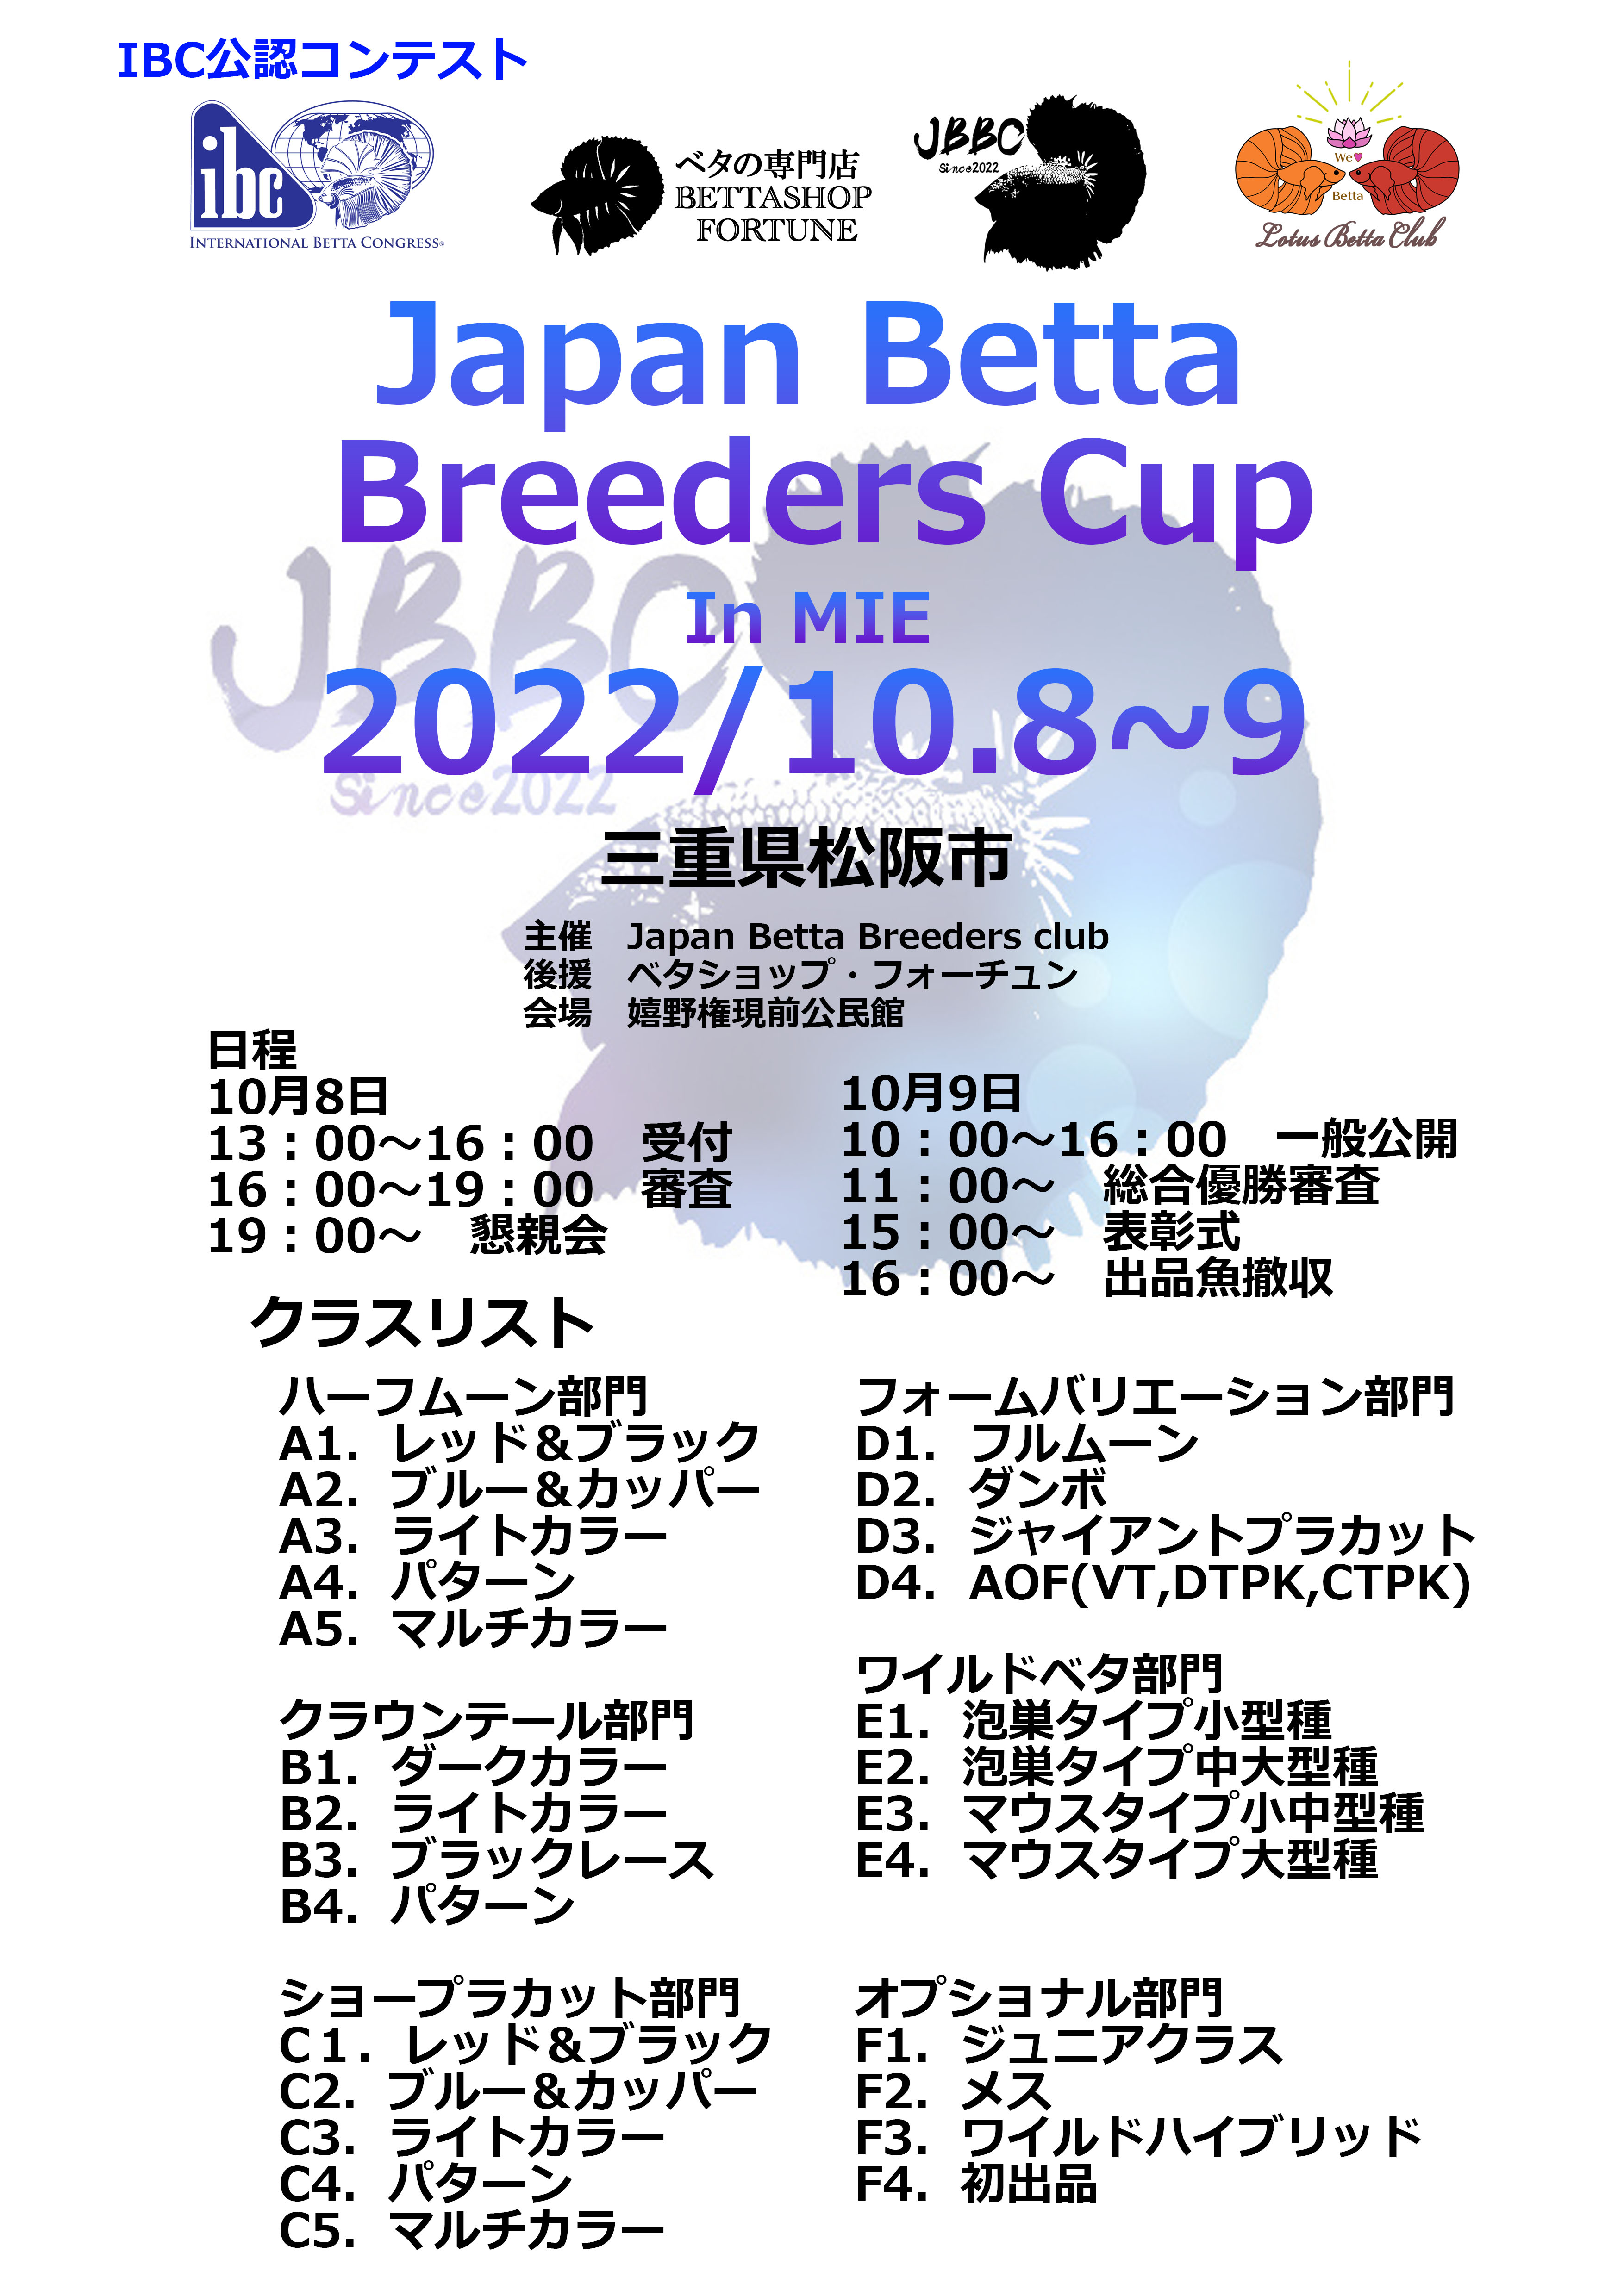 IBC公認ベタコンテスト【Japan Betta Breeders Cup 2022】開催決定！！